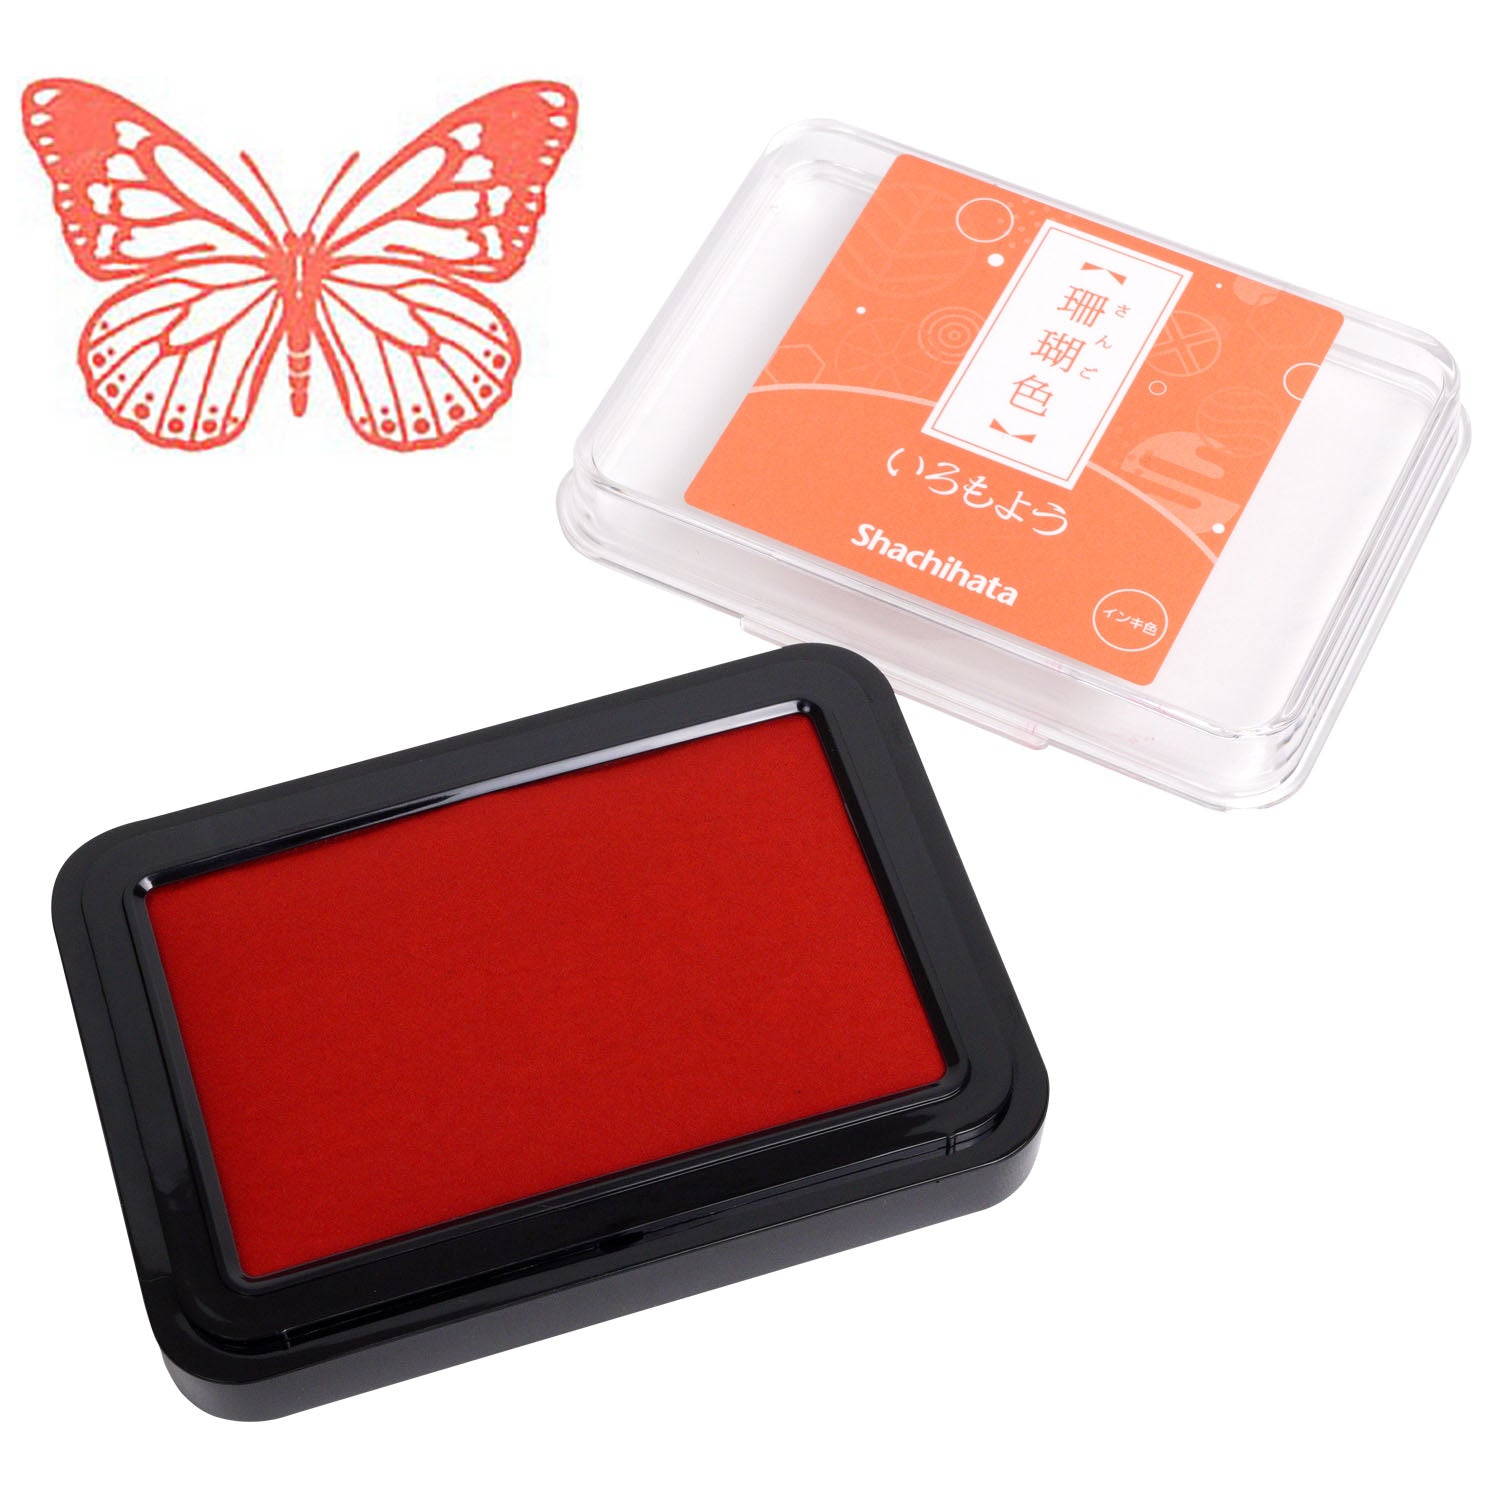 SHACHIHATA Iromoyou Stamp Pad HAC-1 Orange